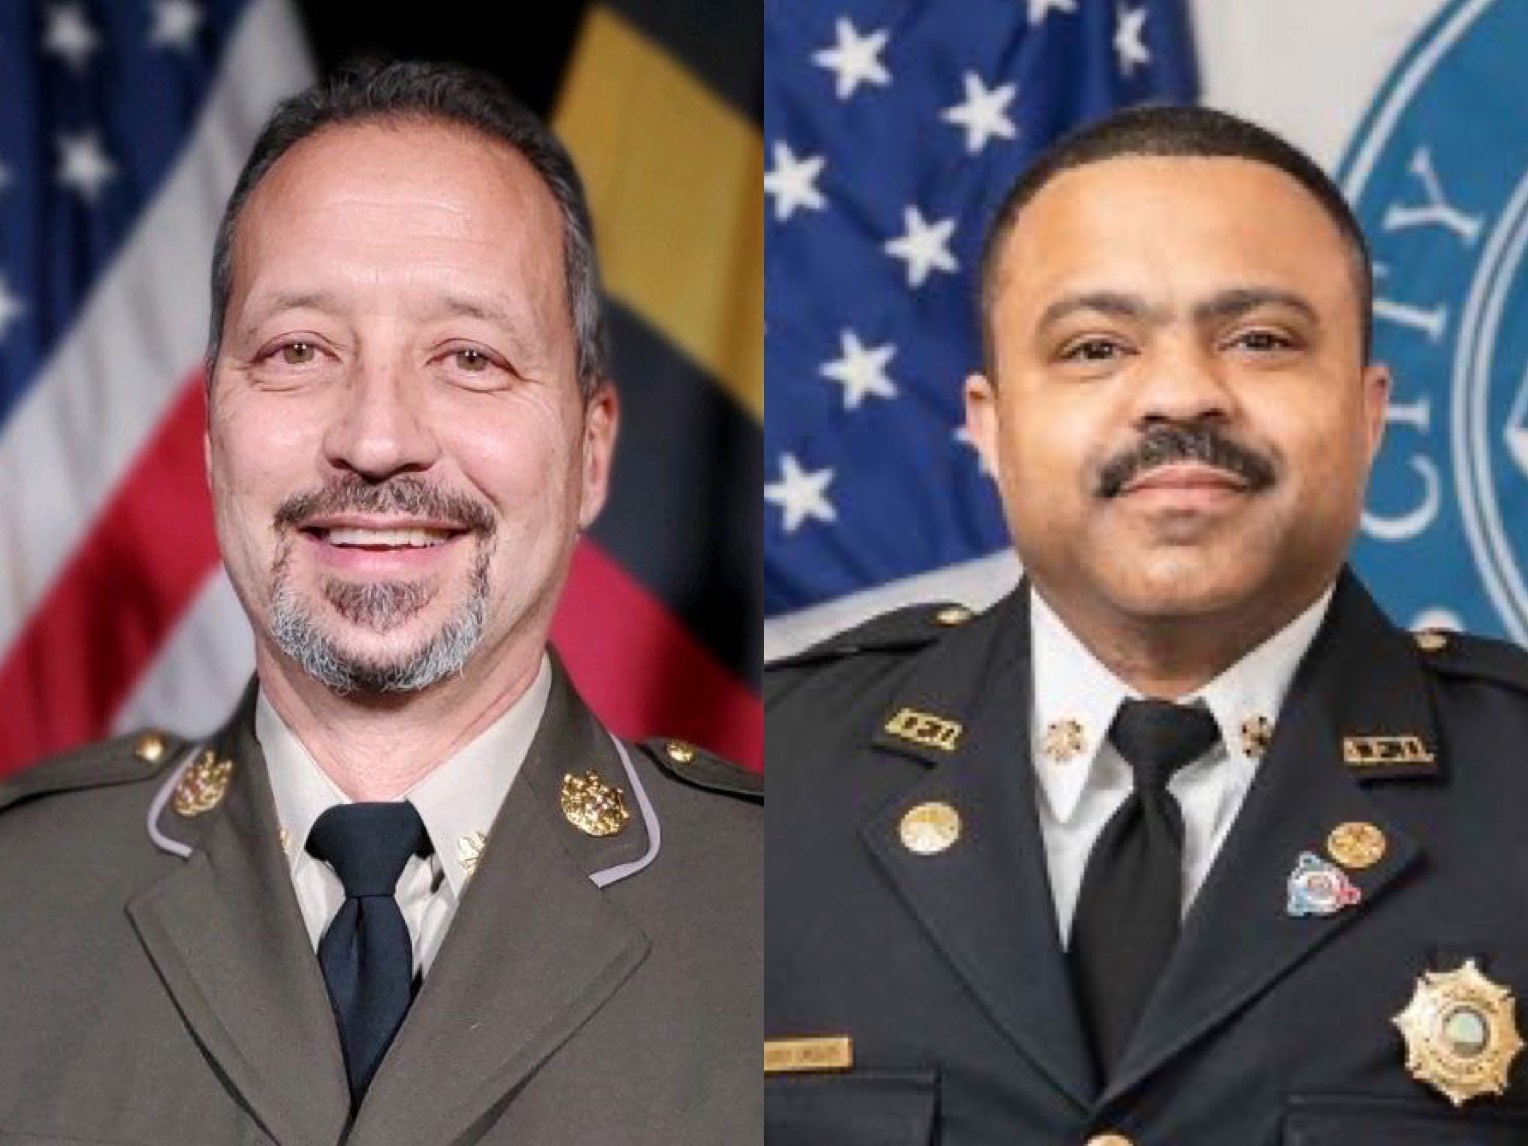 Izquierda: Candidato a Jefe de MCPD, Marc Yamada; Derecha: Candidato a Jefe de bomberos Corey Smedley.